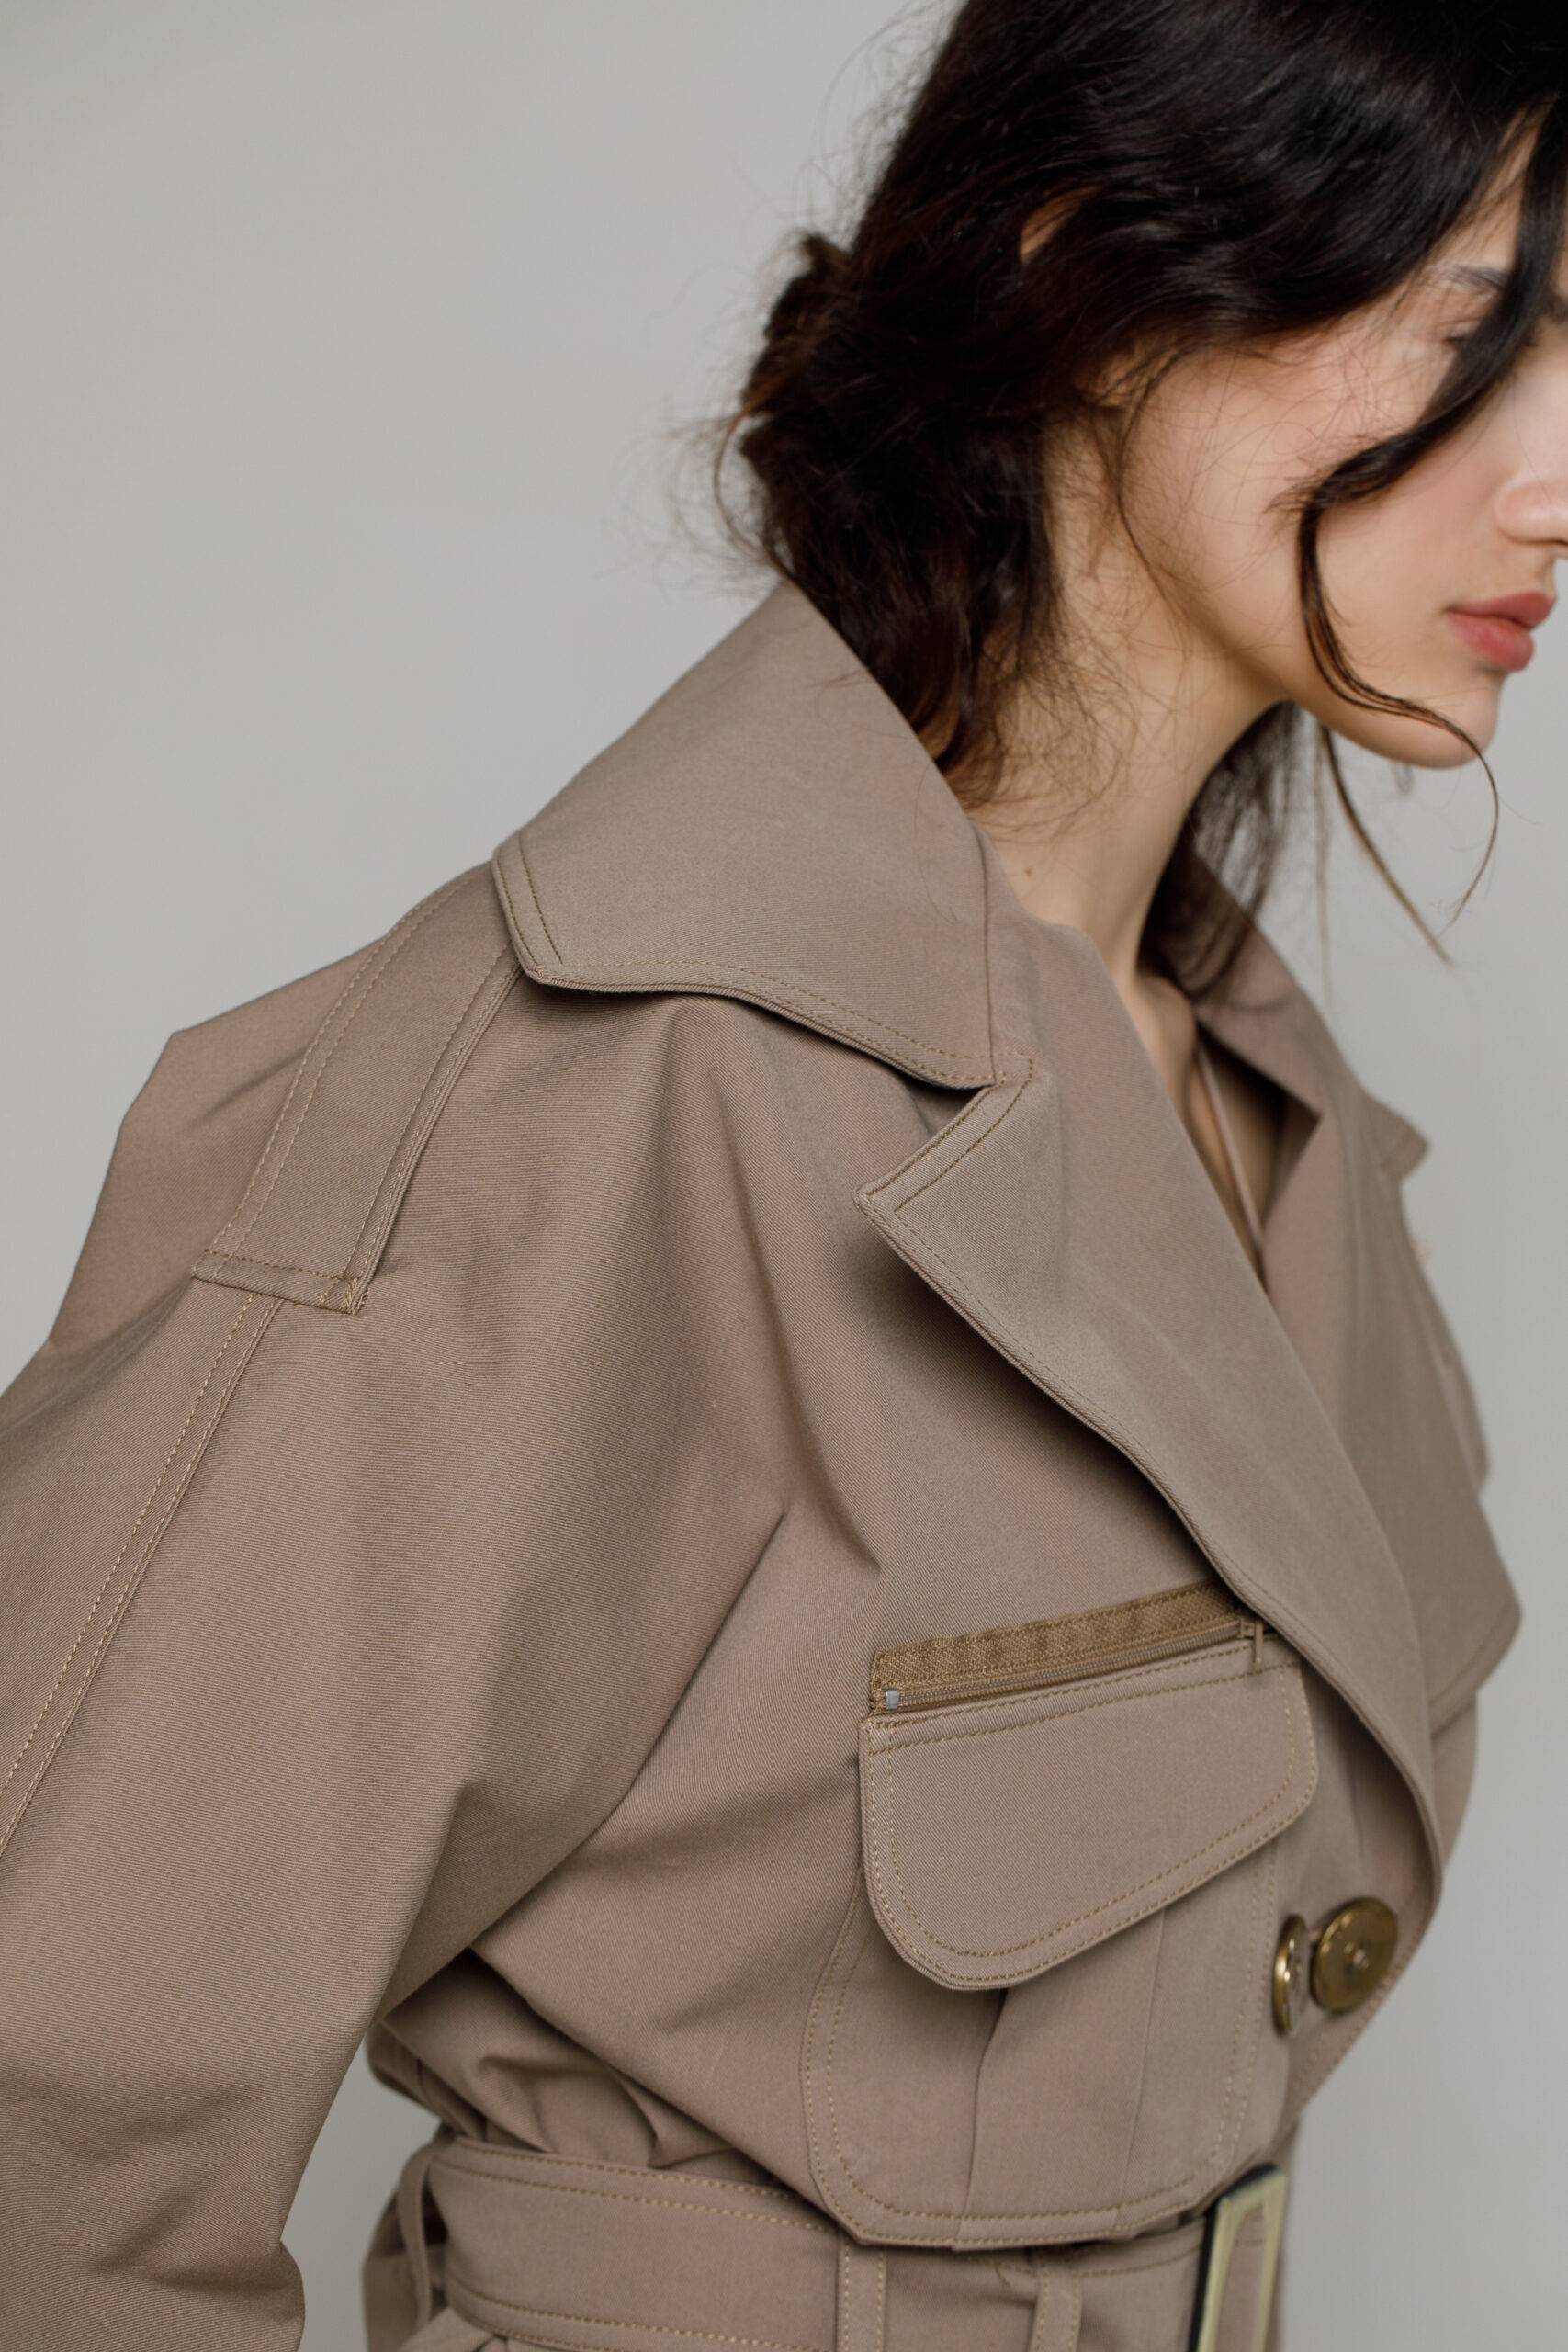 LETO casual corduroy jacket in beige terracotta. Natural fabrics, original design, handmade embroidery